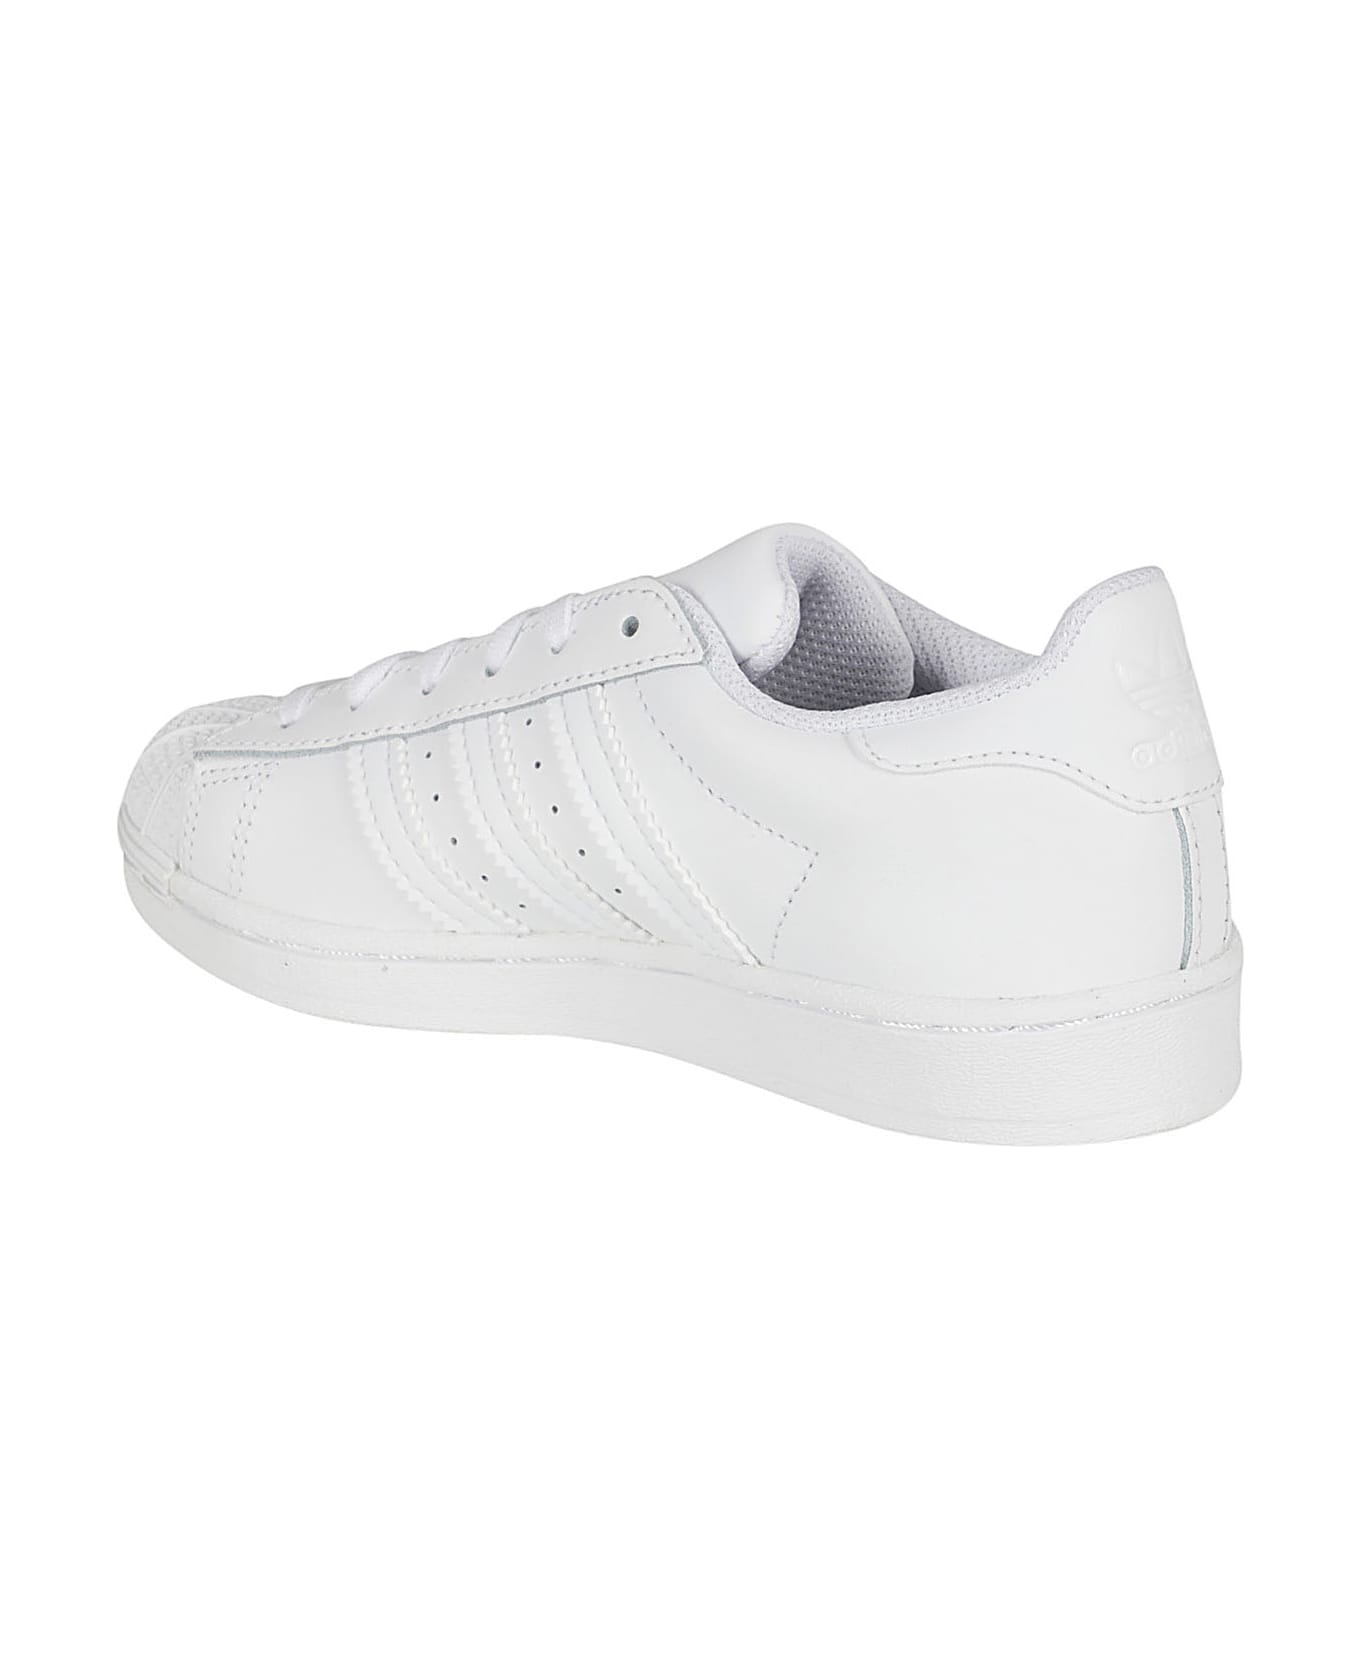 Adidas Originals Superstar - White